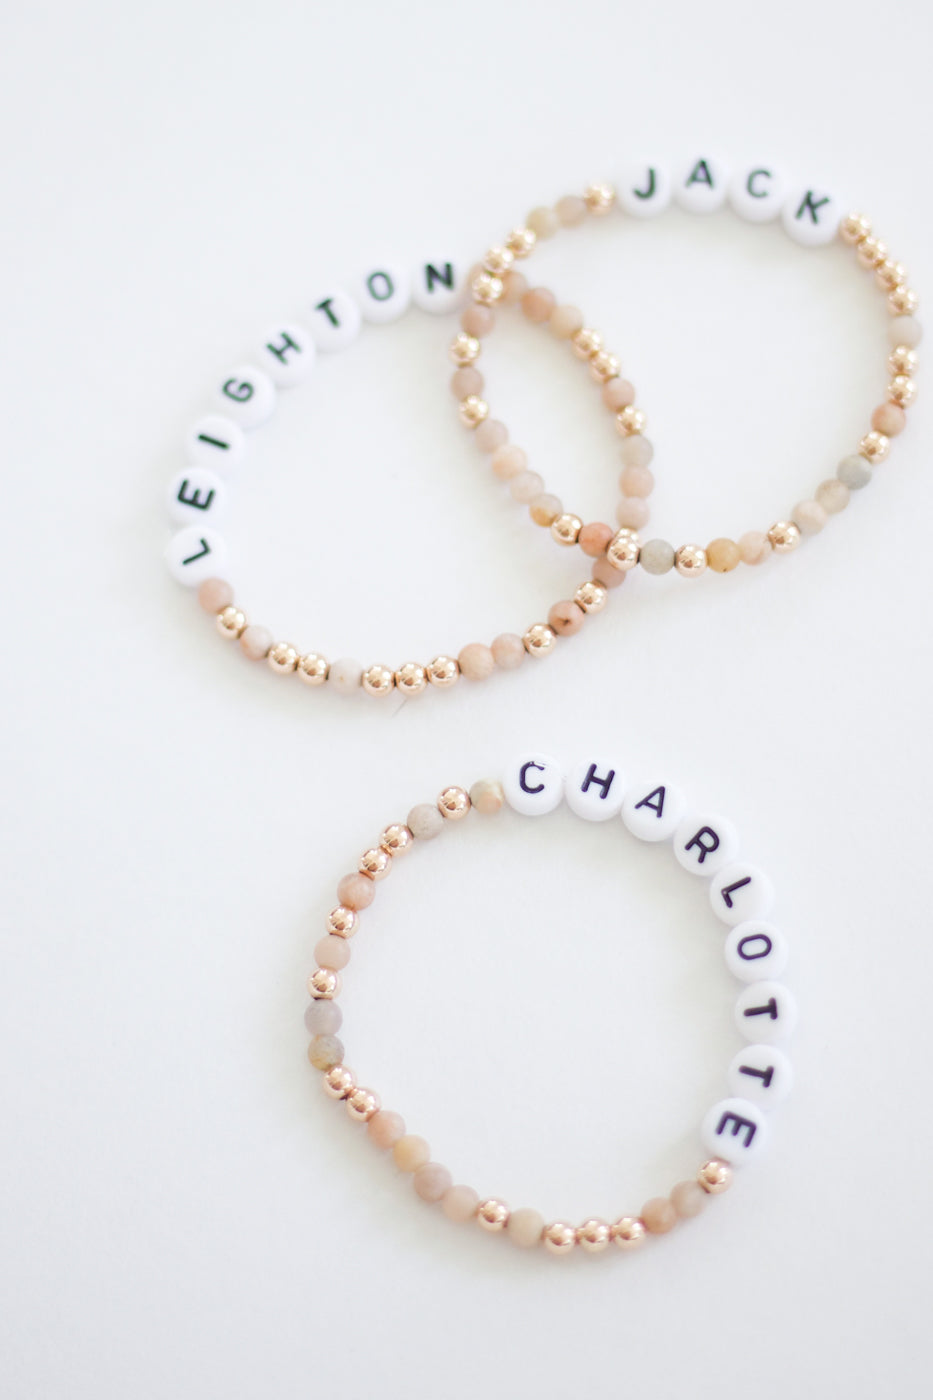 Pink 18K Gold beaded bracelet stack with custom letter beads